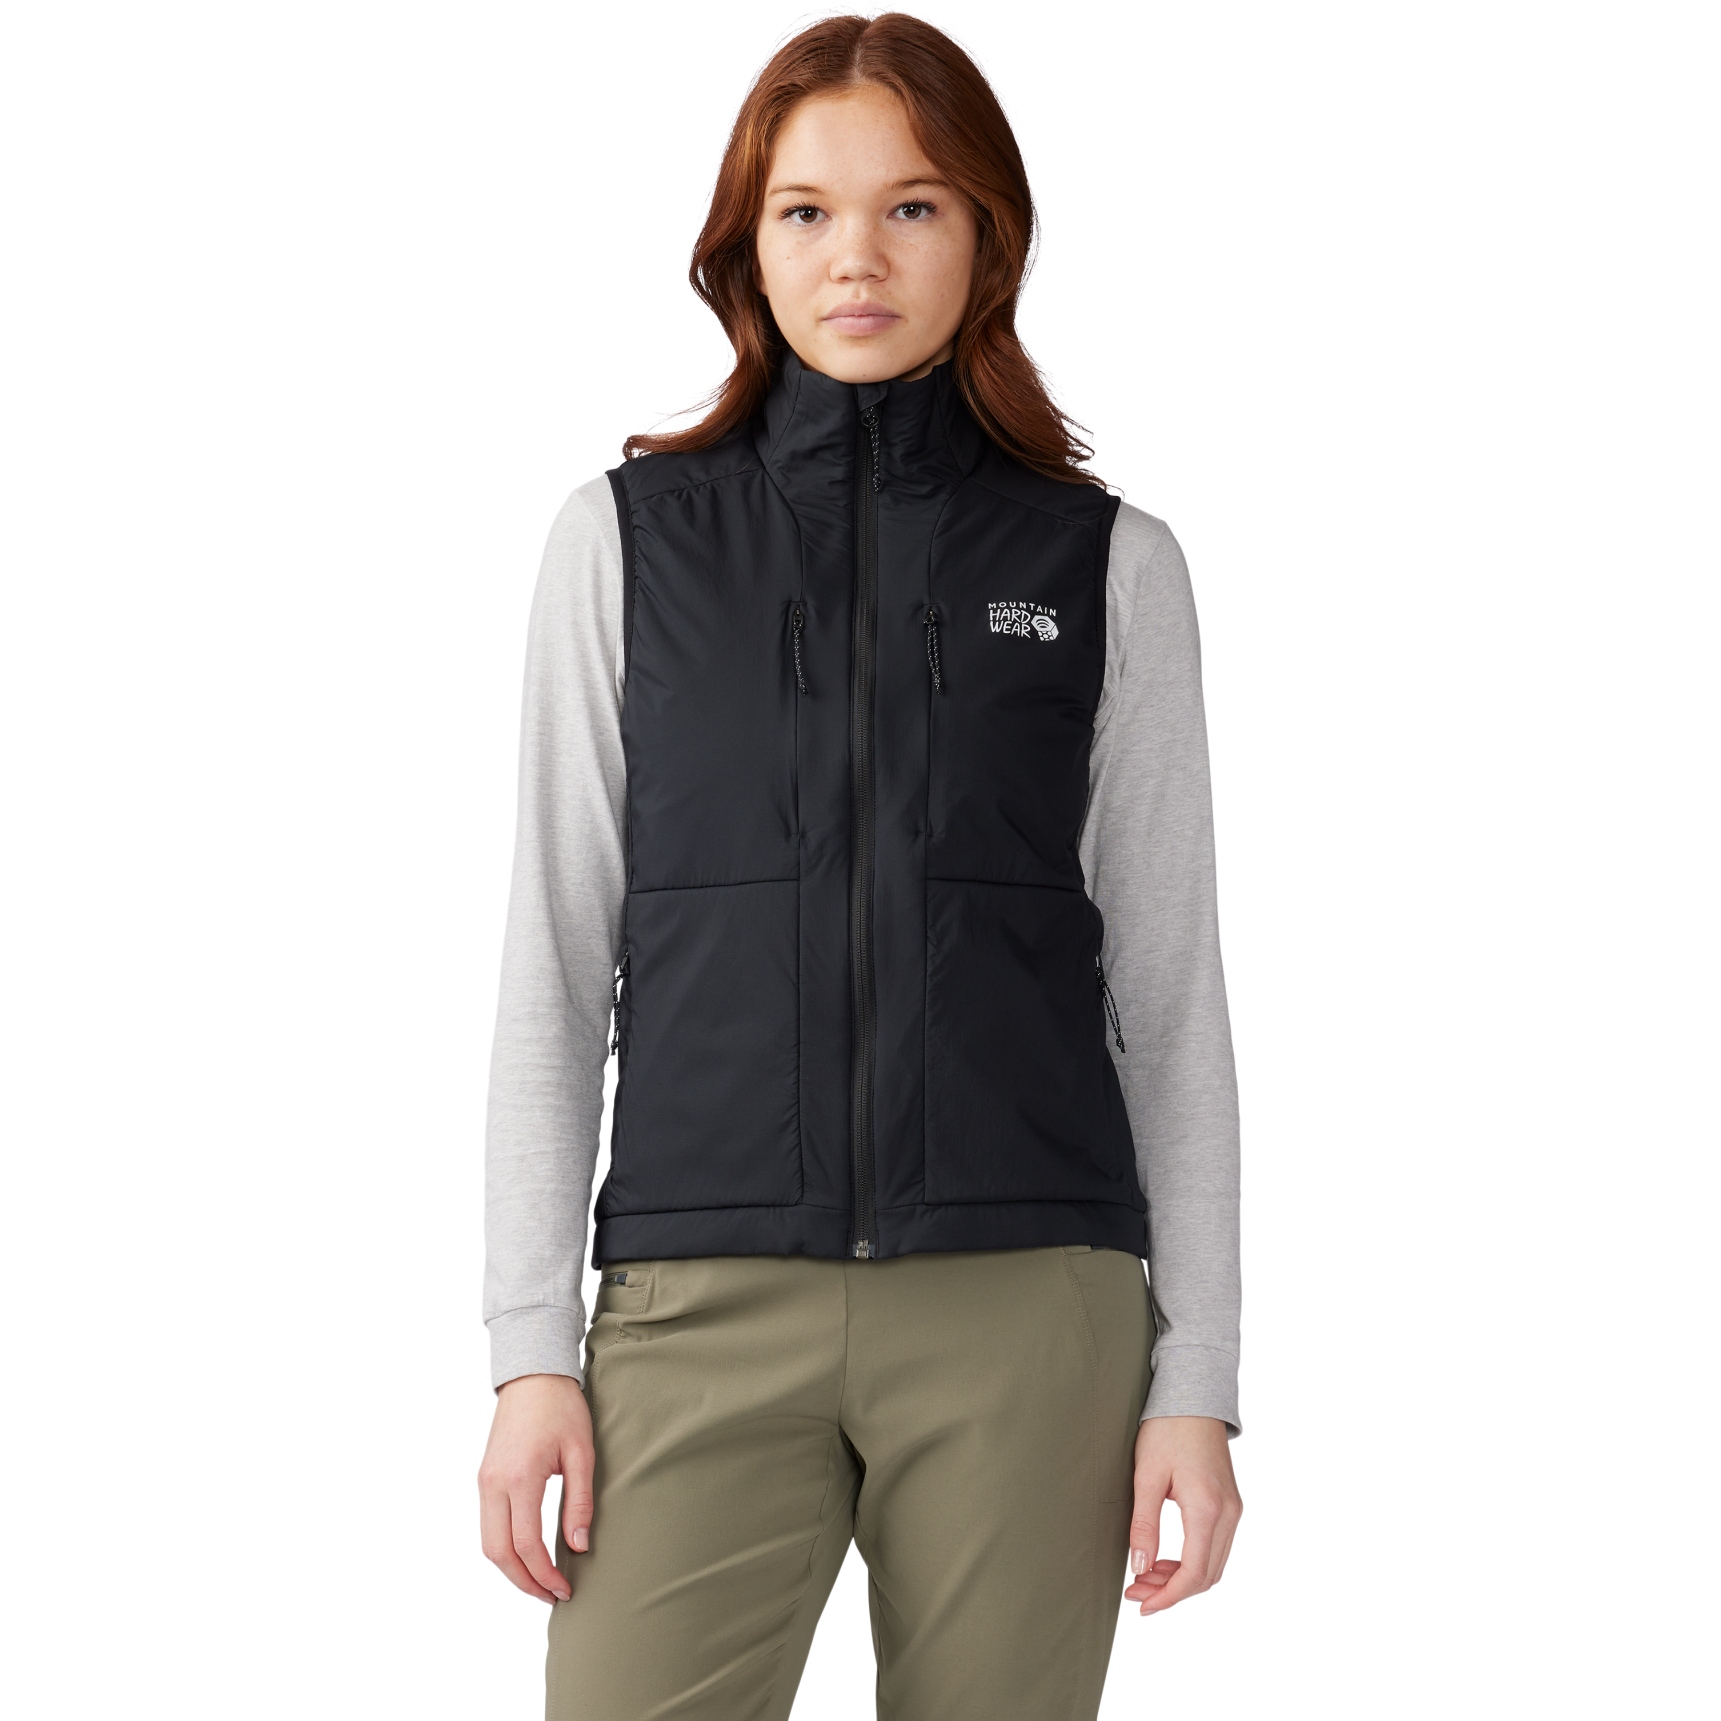 Productfoto van Mountain Hardwear Kor Airshell™ Warm Dames Vest - black